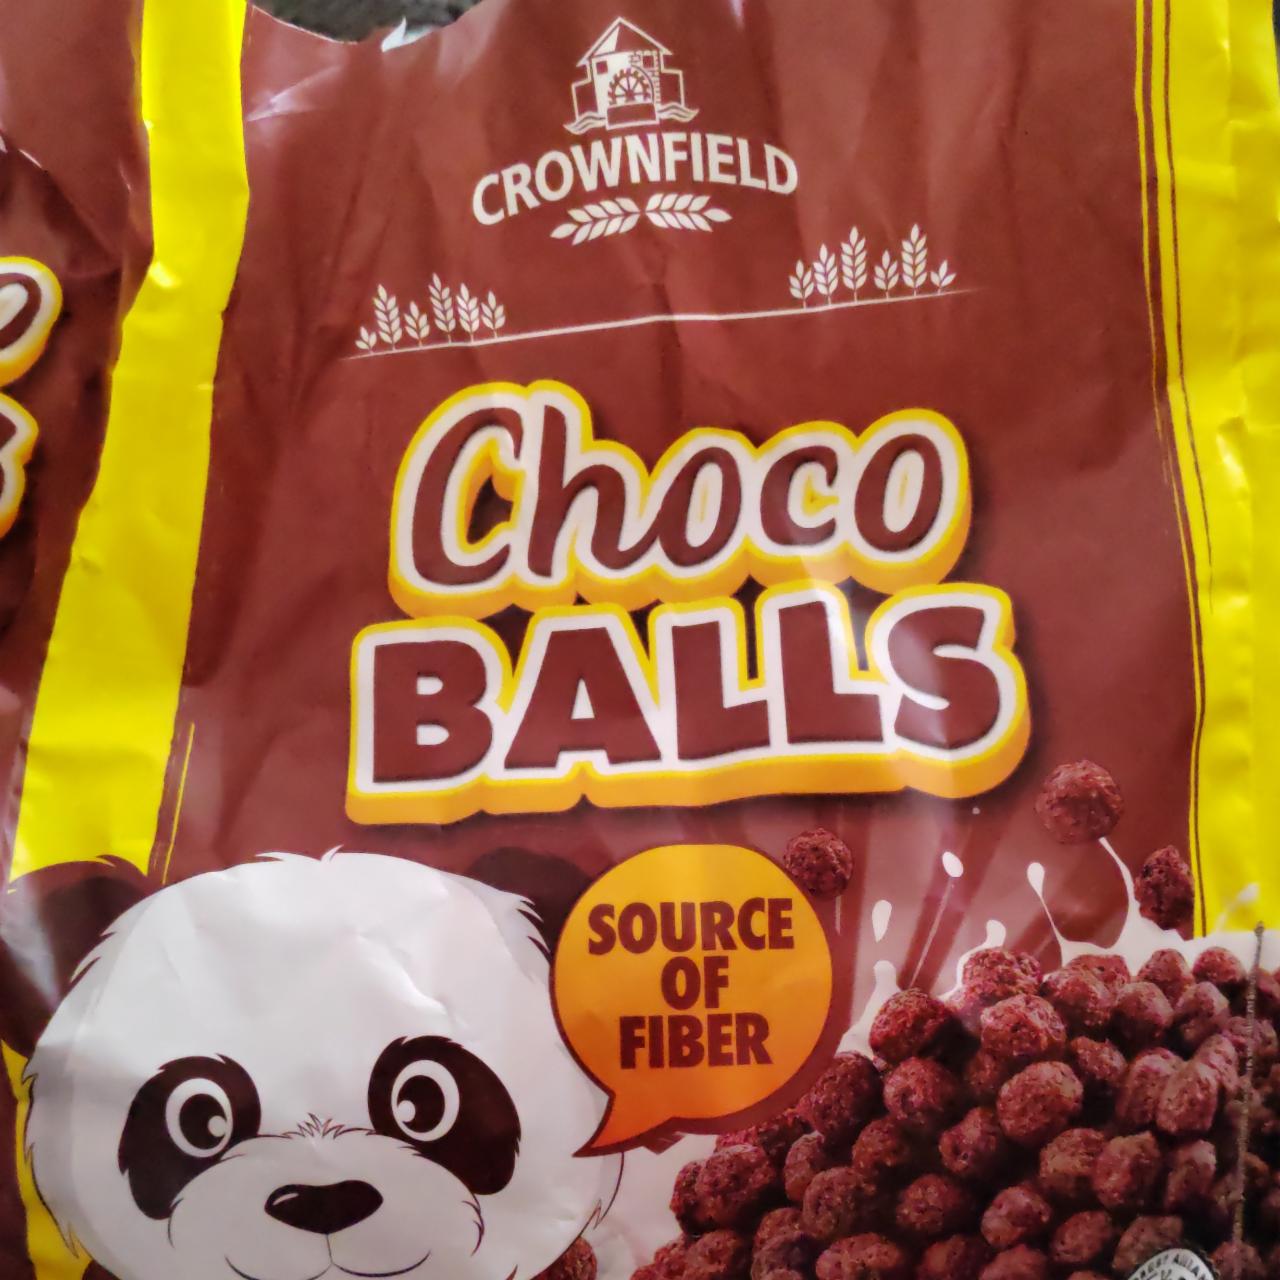 Képek - Choco balls Crownfield